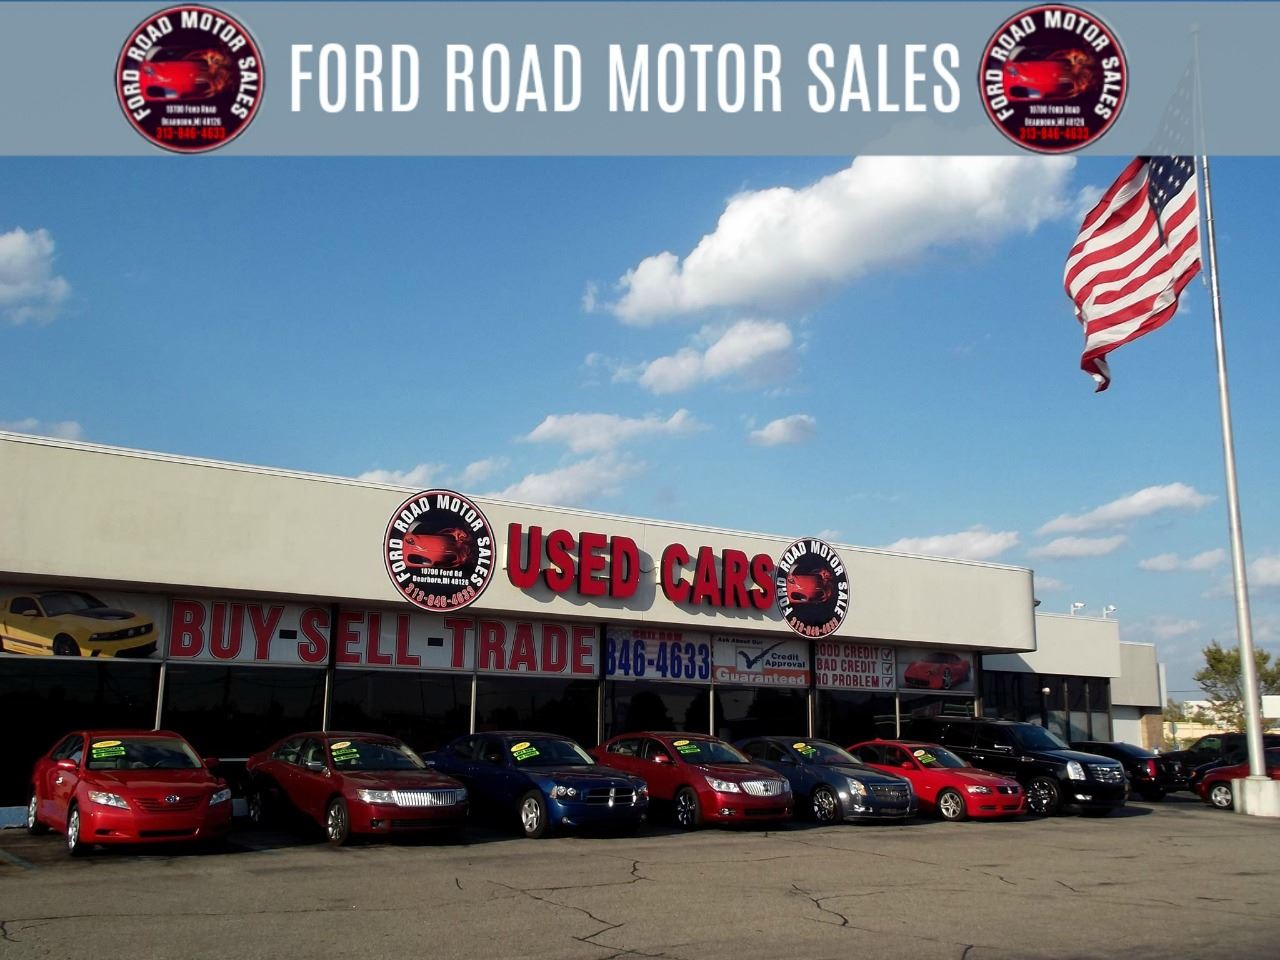 Ford Road Motor Sales